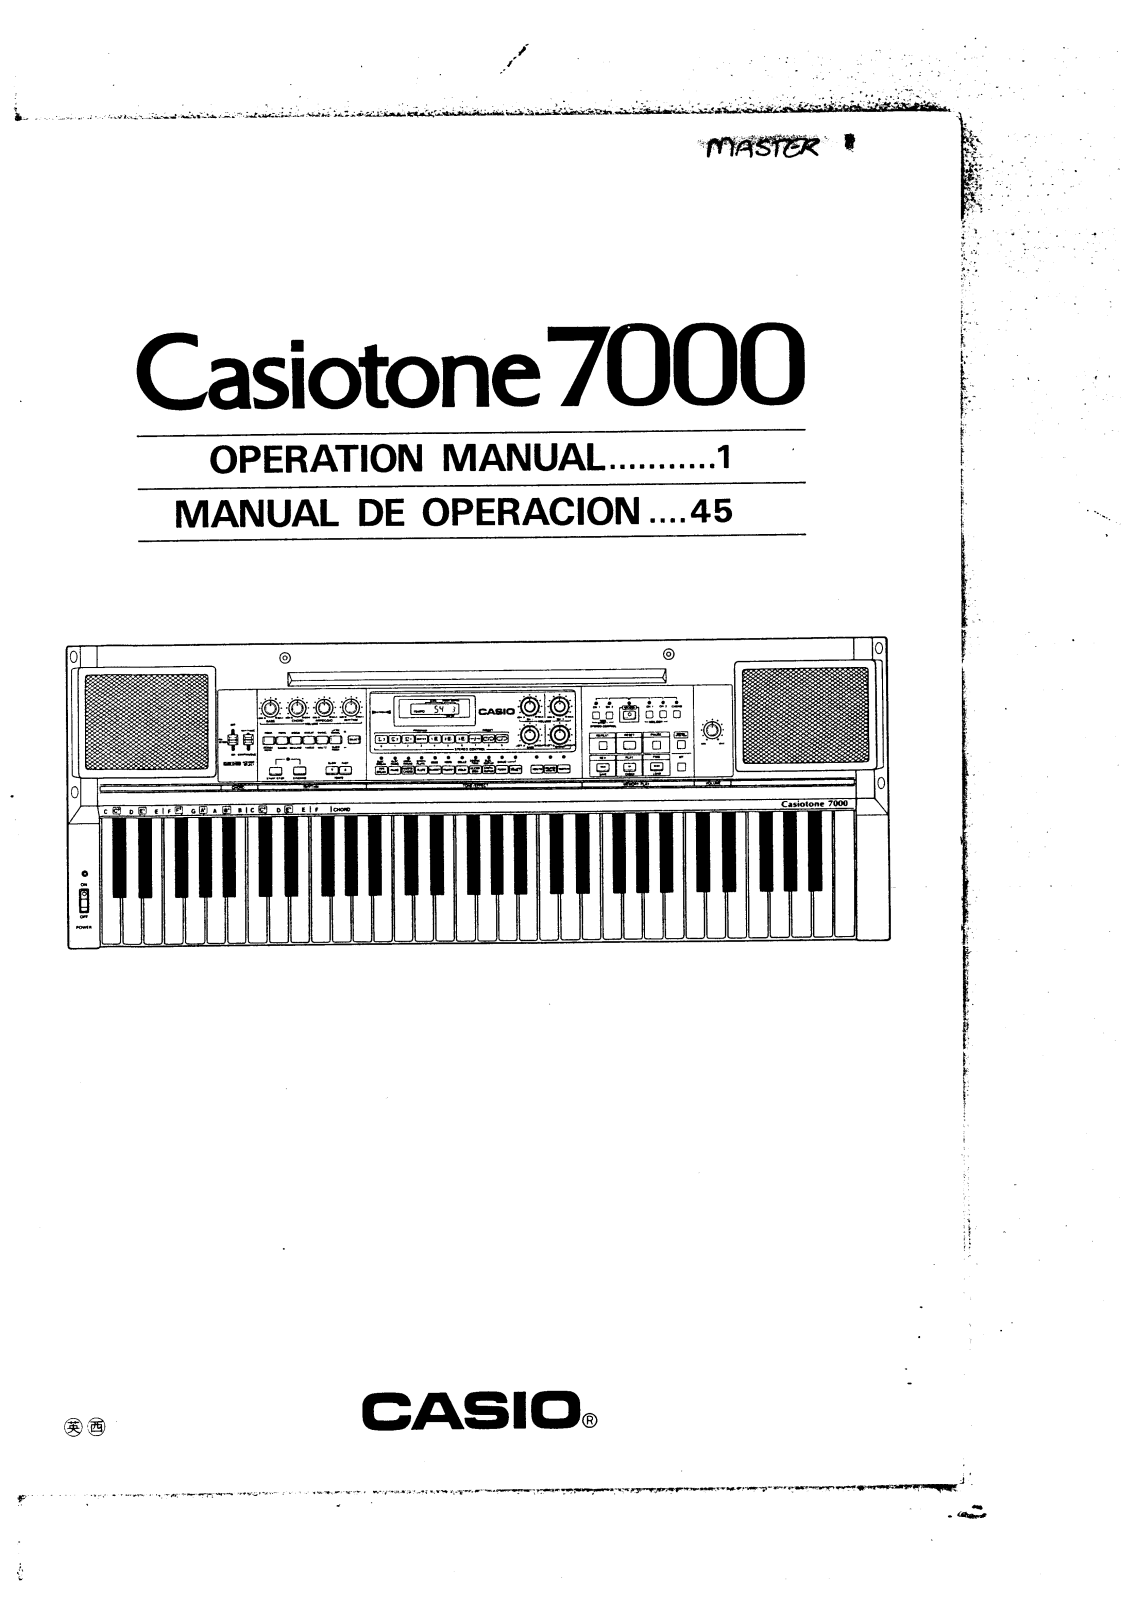 Casio Casiotone 7000 User Manual